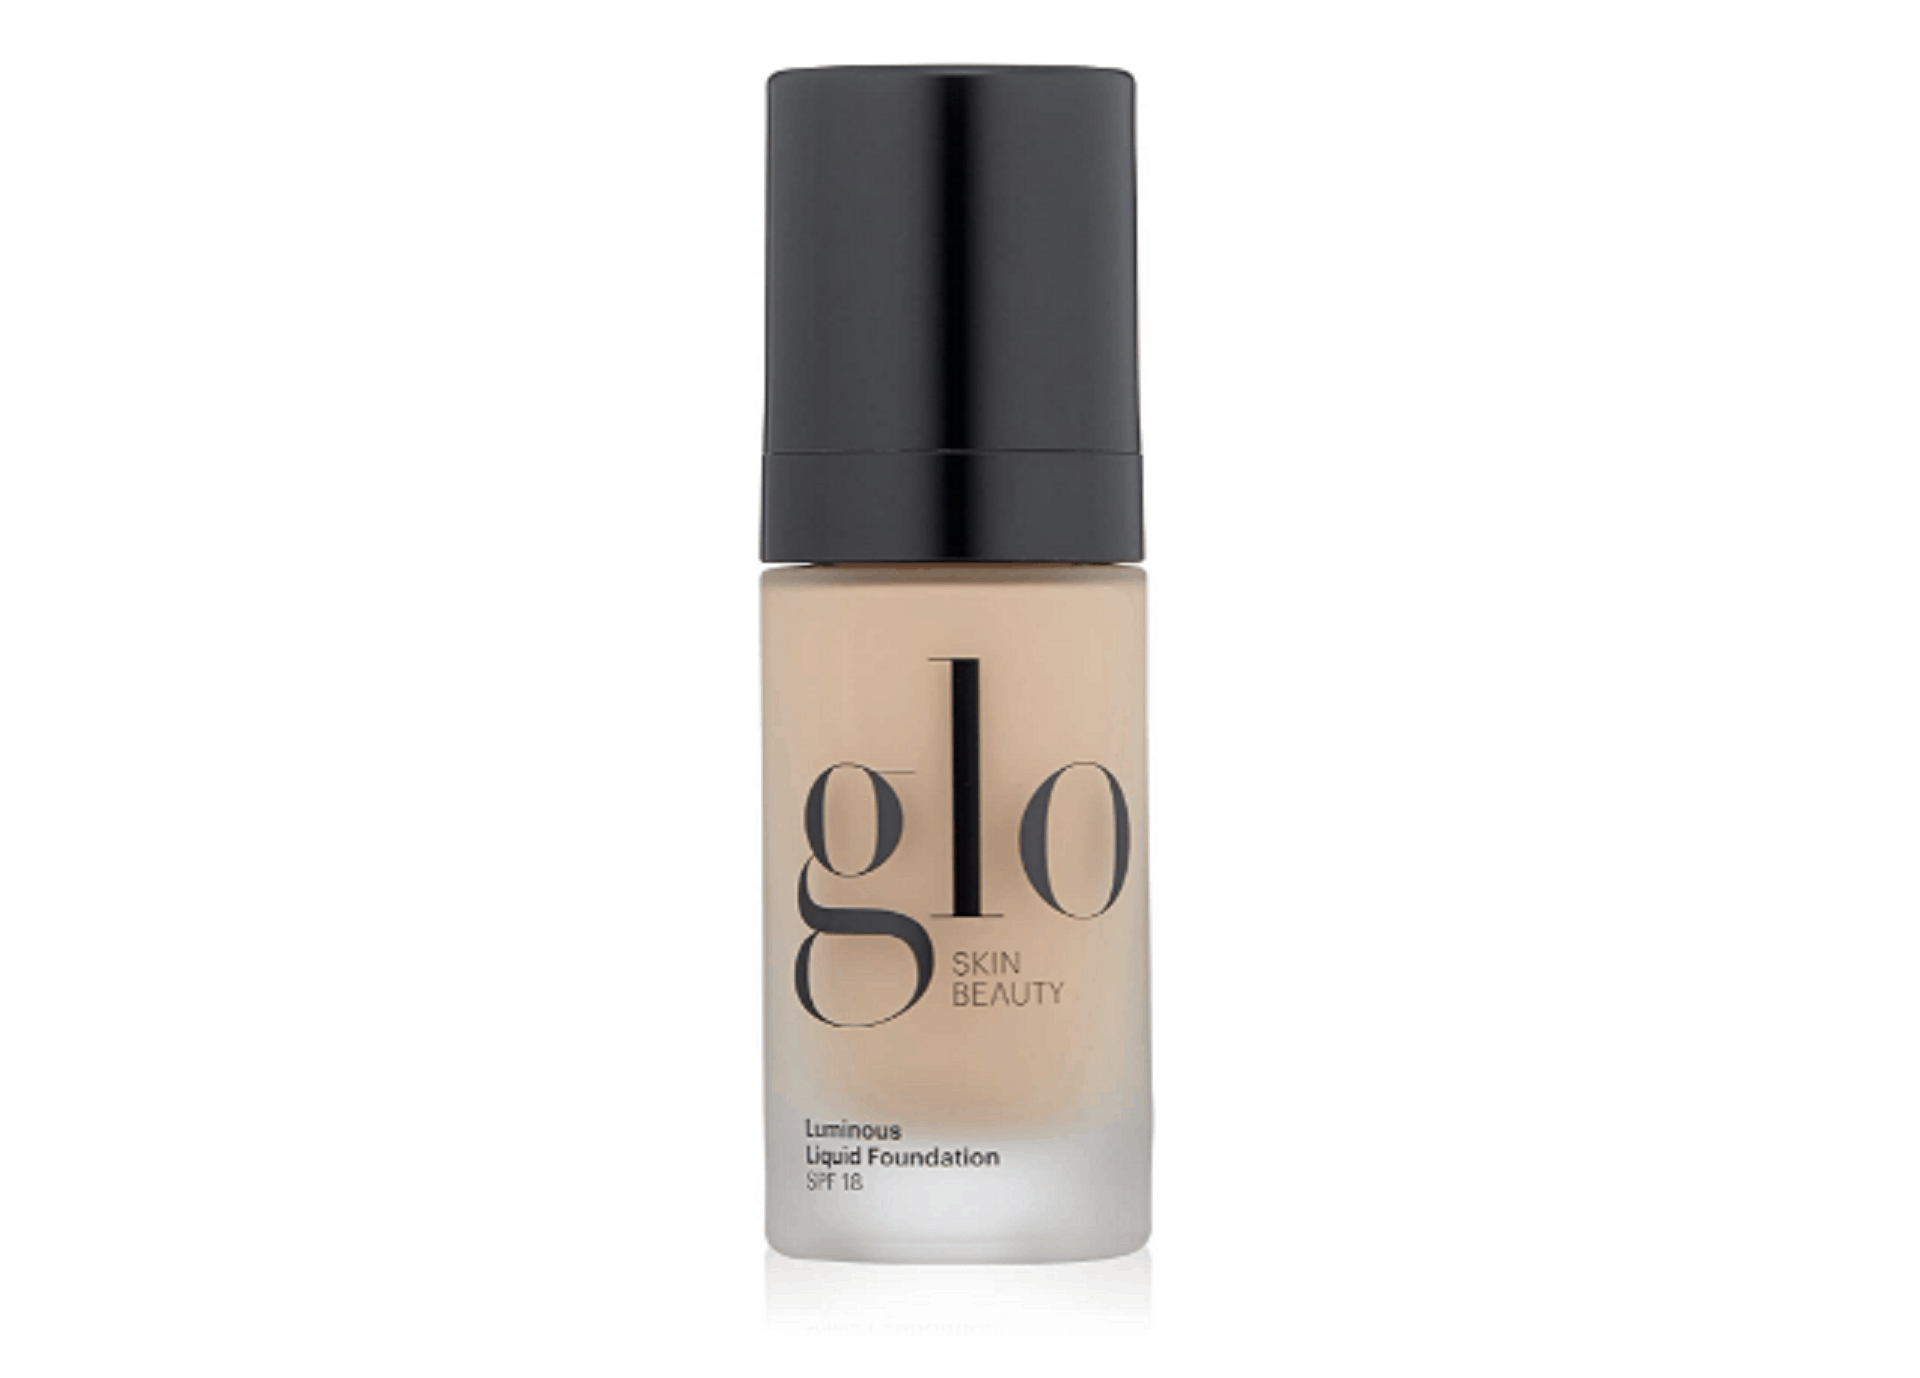 glo skin beauty luminous liquid foundation